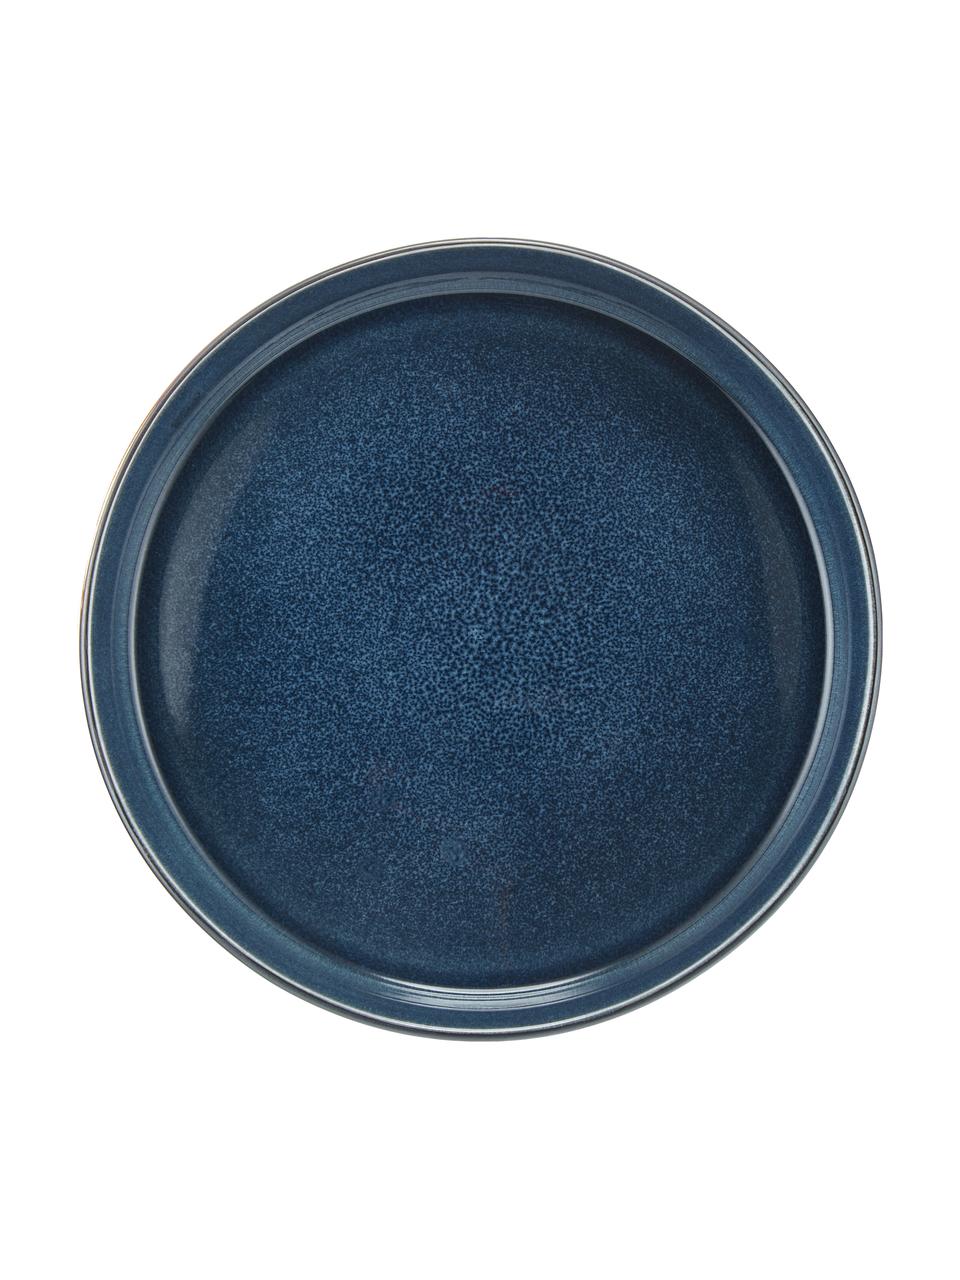 Soepborden Quintana, 2 stuks, Porselein, Blauw, bruin, Ø 23 cm